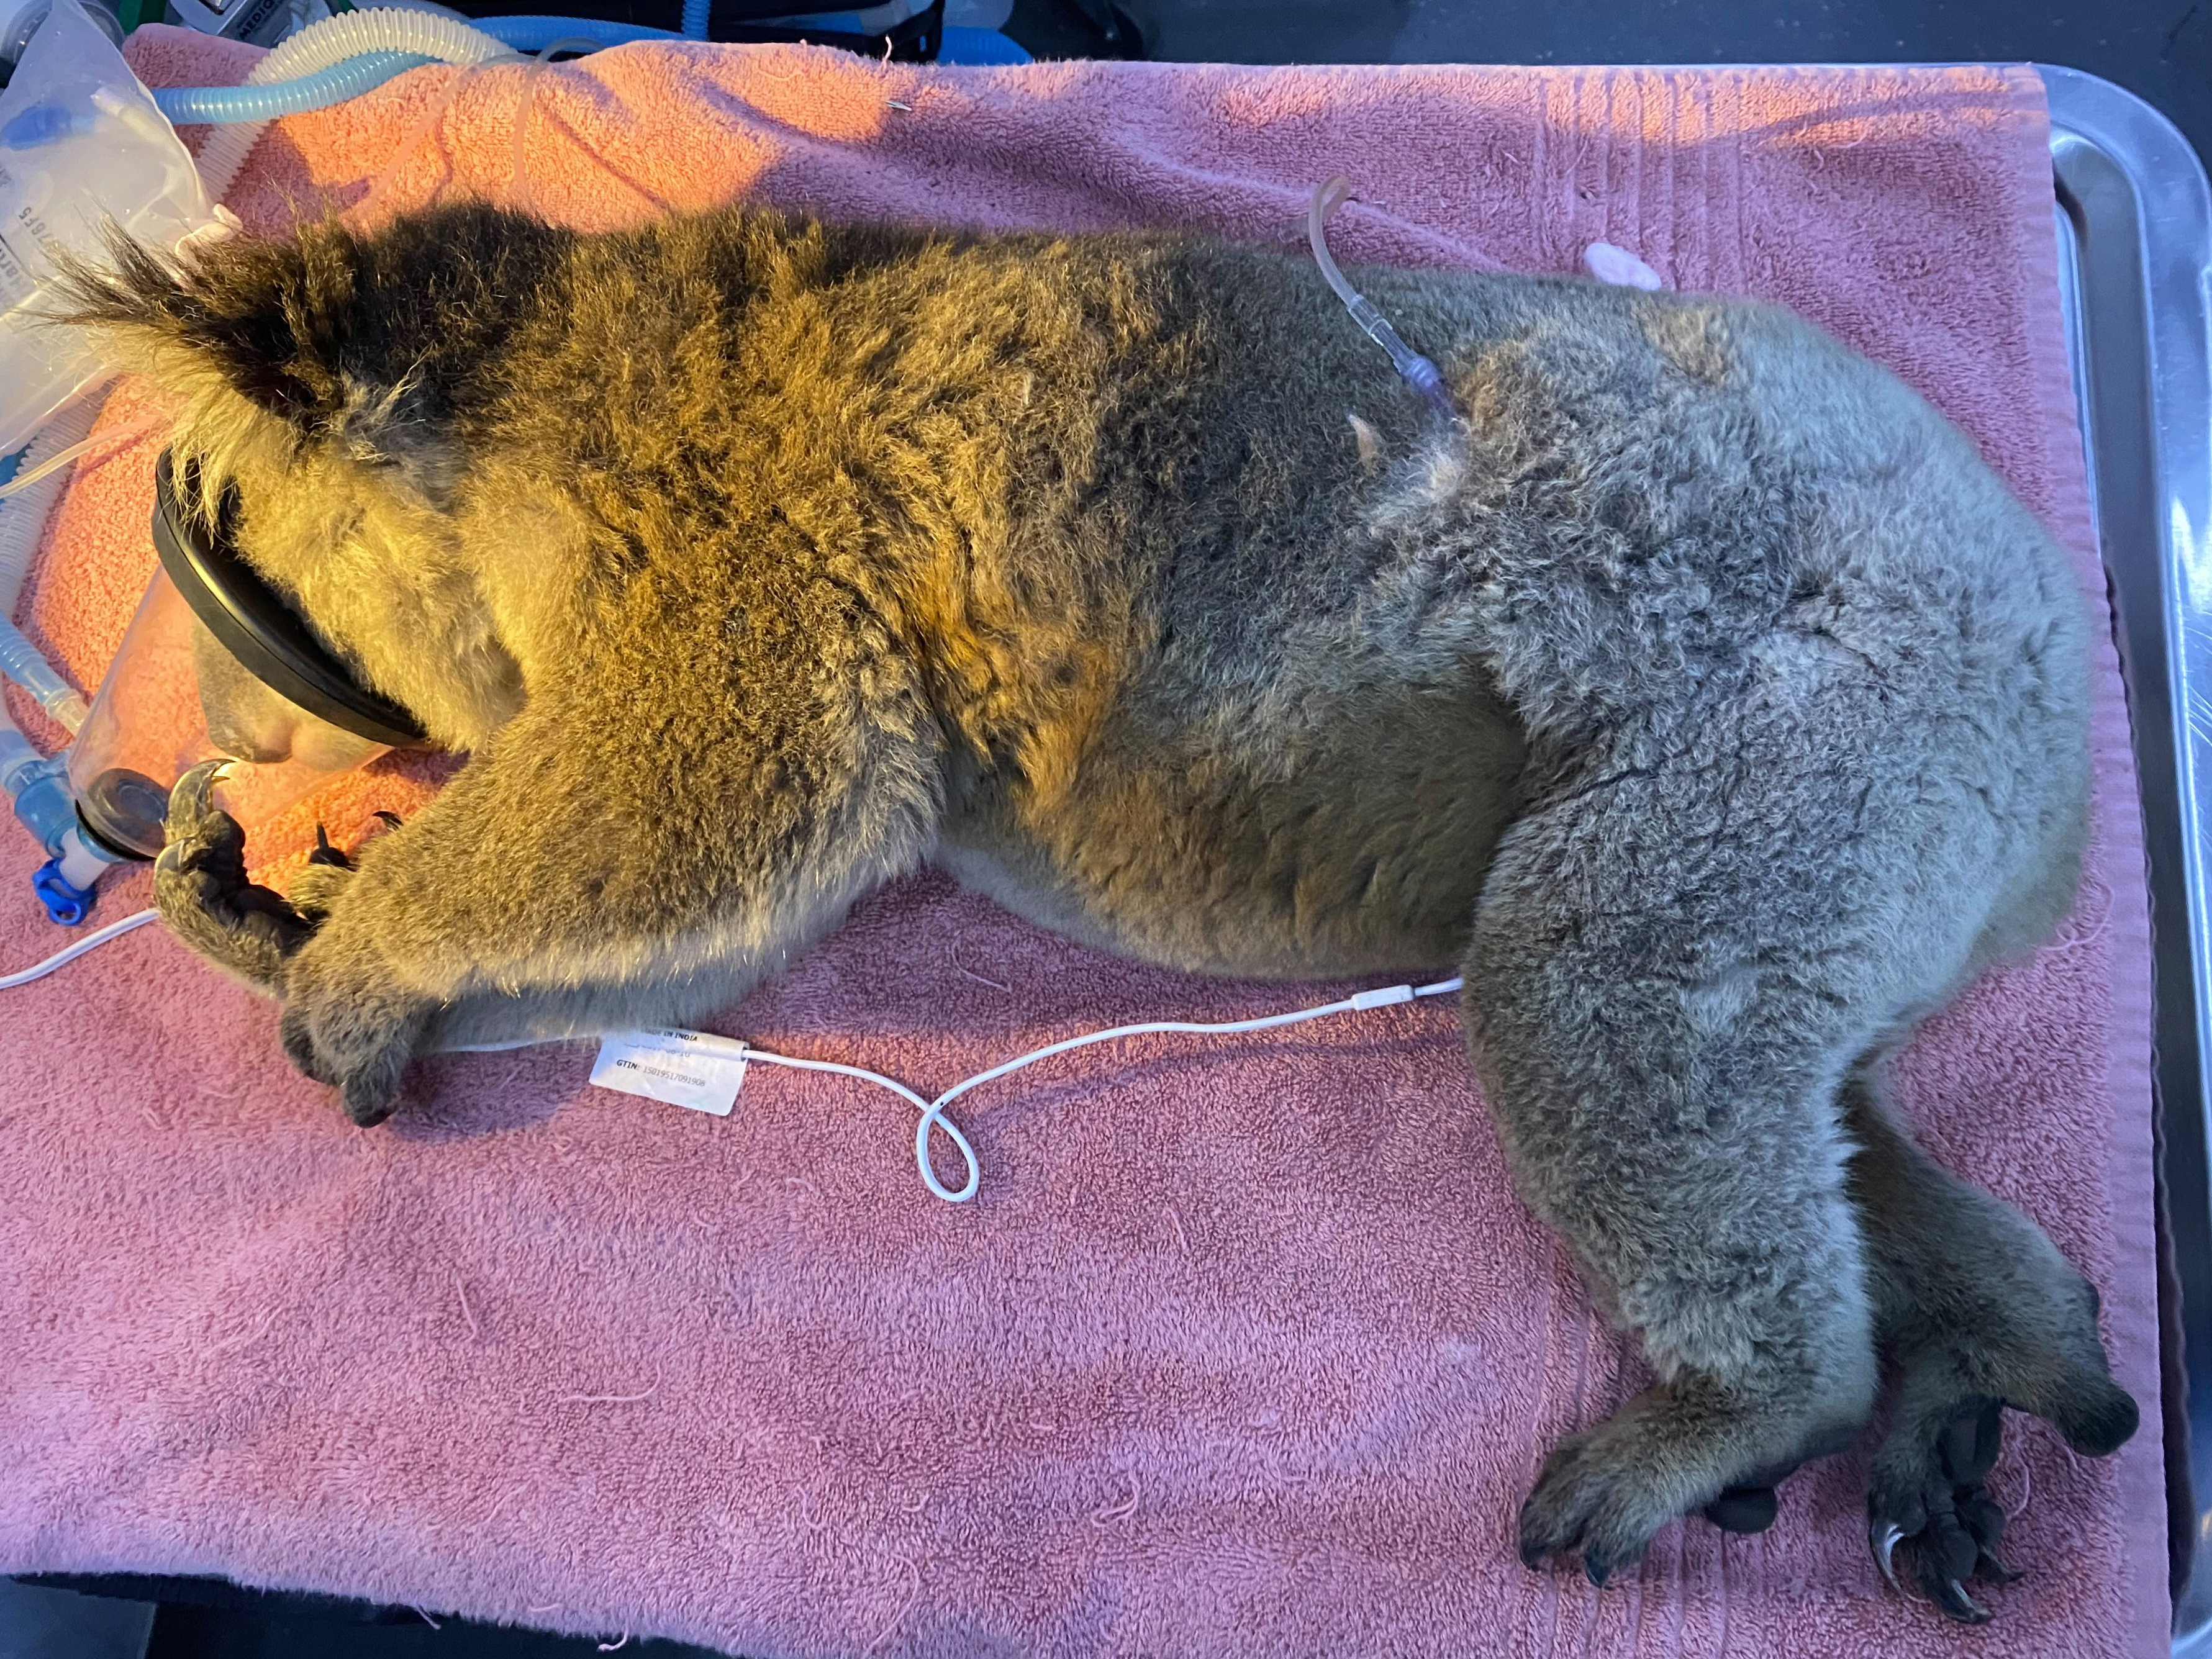 A koala being treated at Sydney's Taronga Zoo after the 2019-20 bushfires.